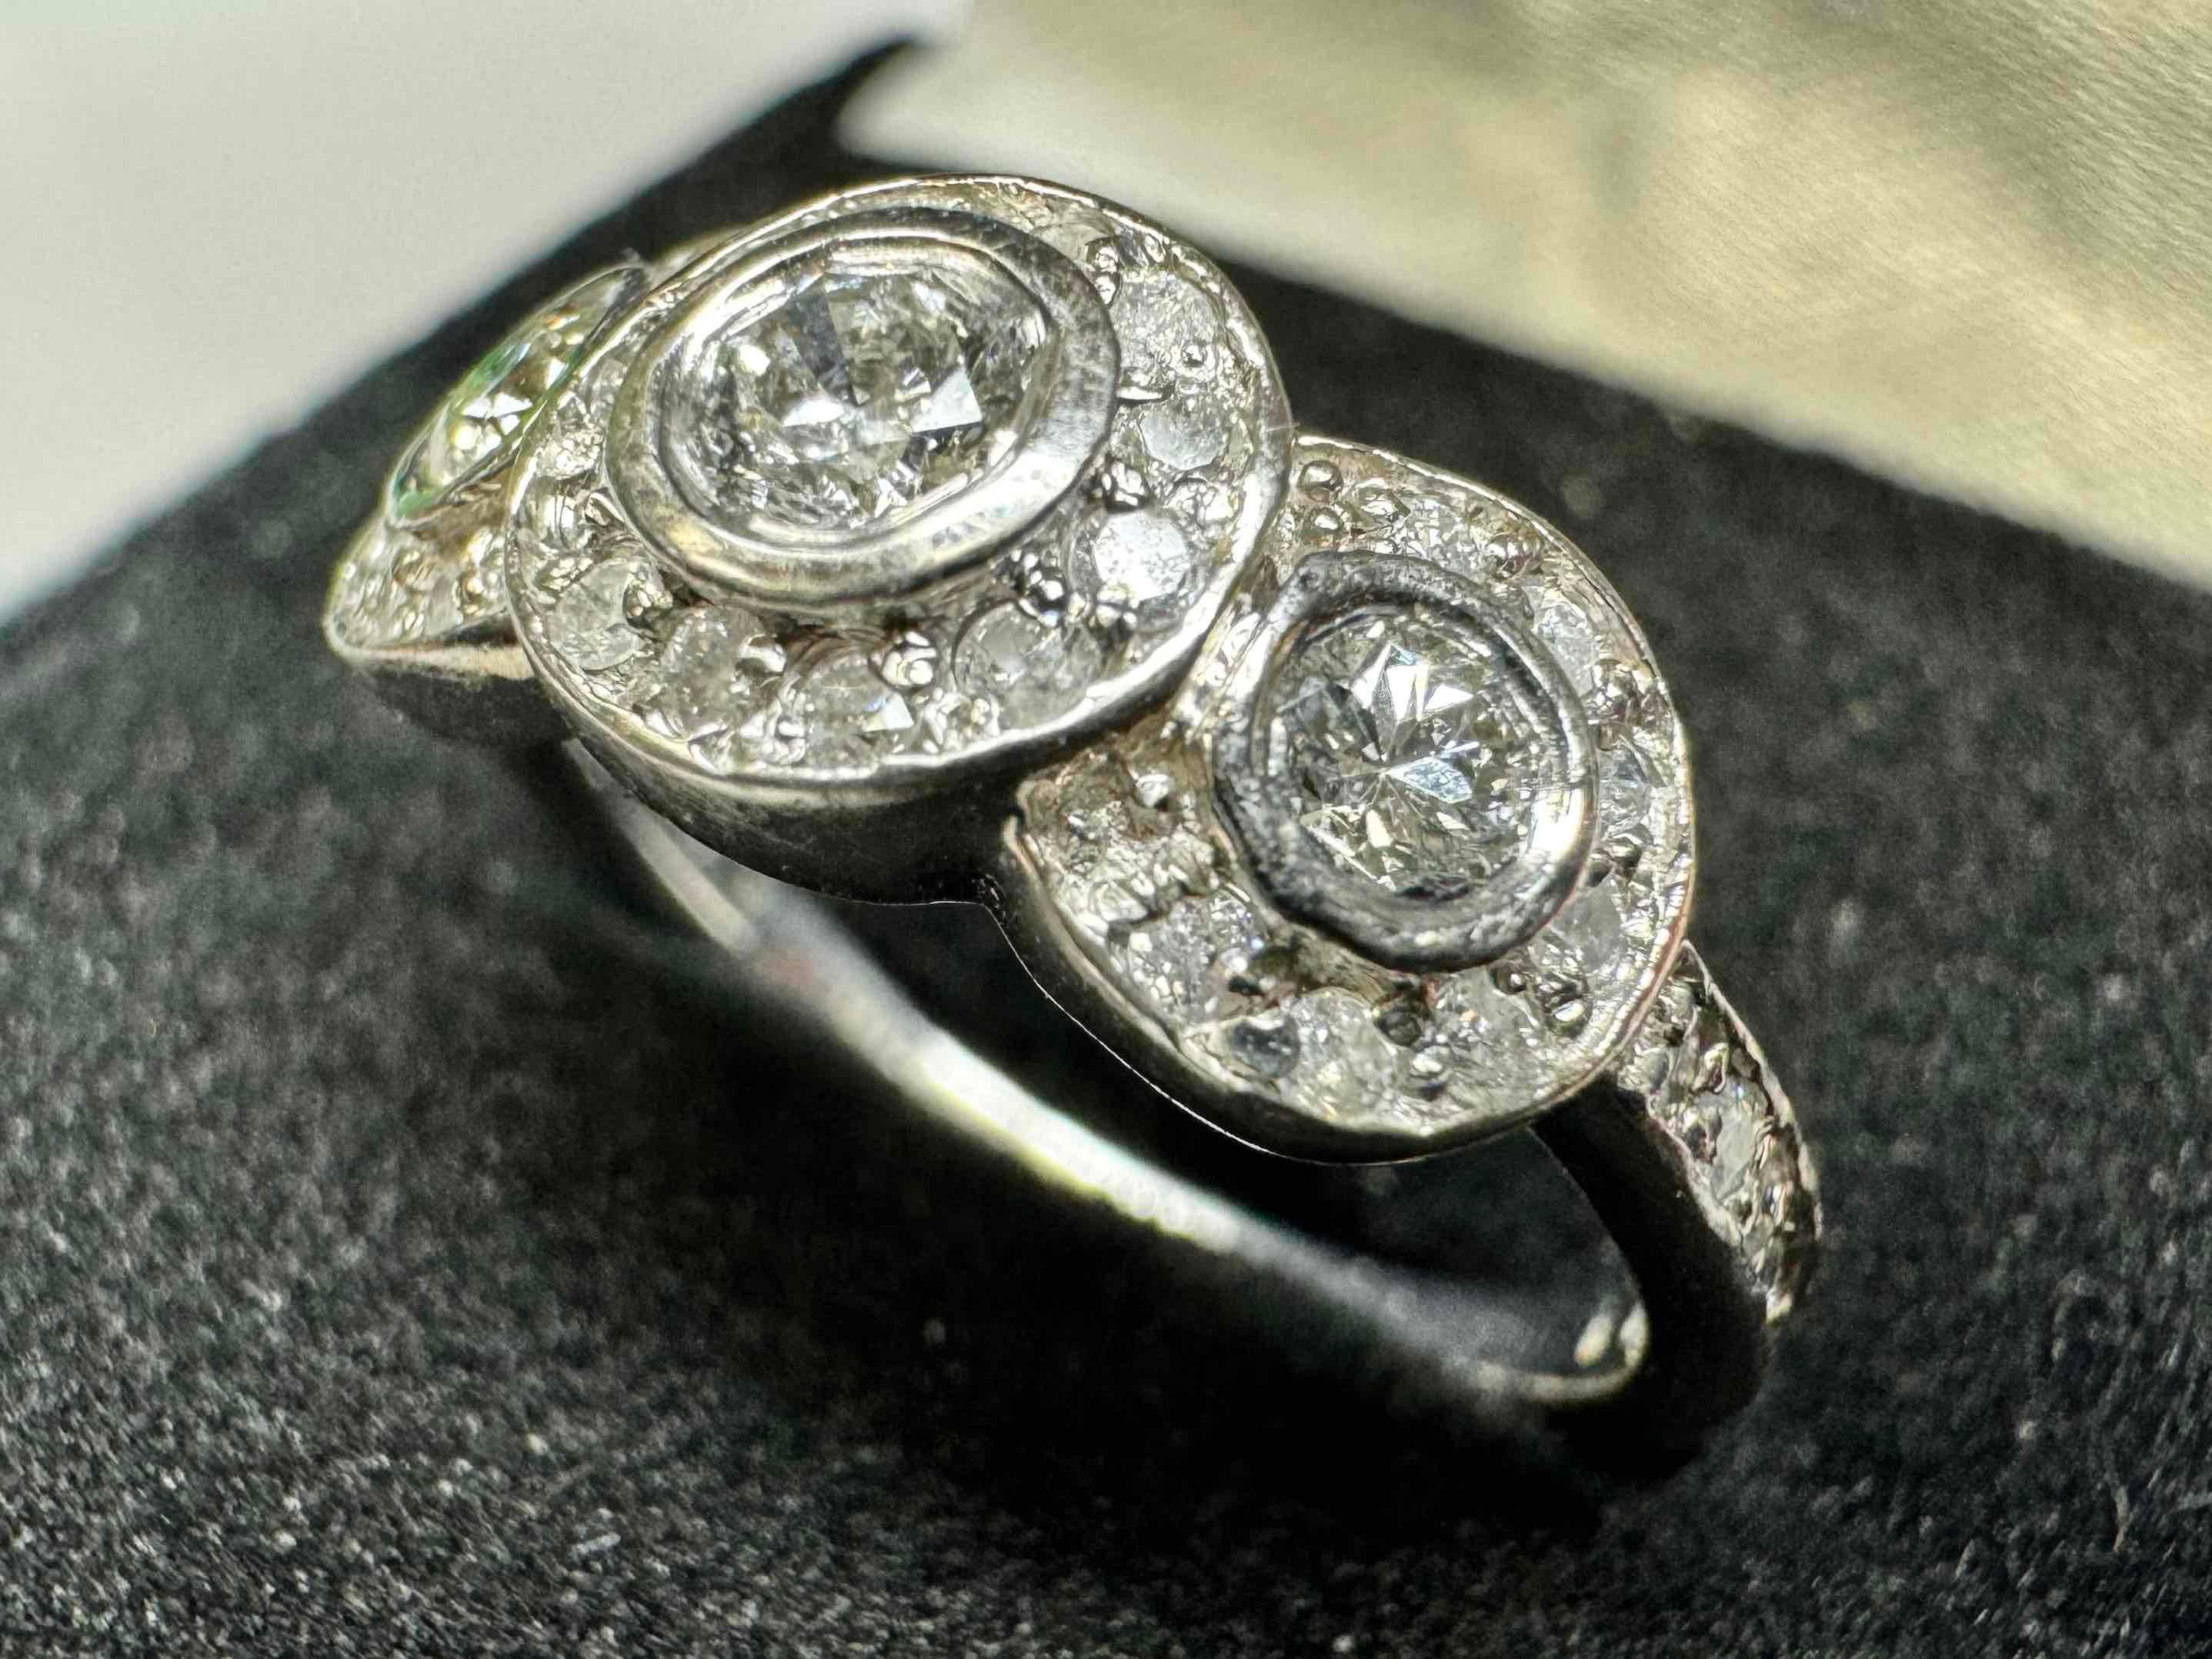 14k White Gold Diamond Ring Size 6.5 2.93g Total